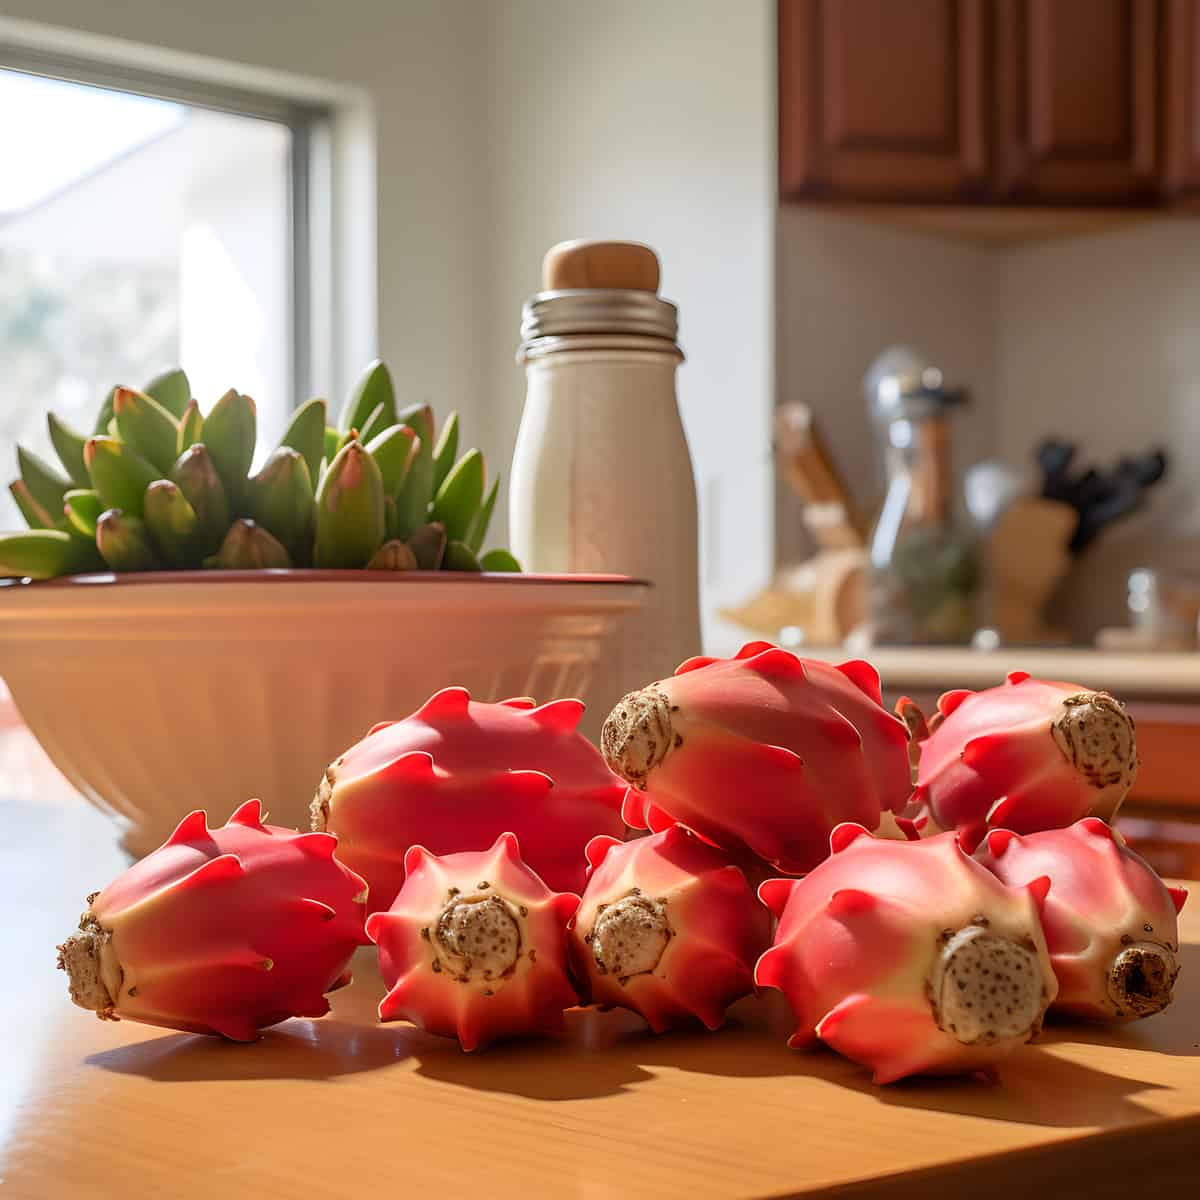 Peruvian Apple Cactus Fruit on a kitchen counter